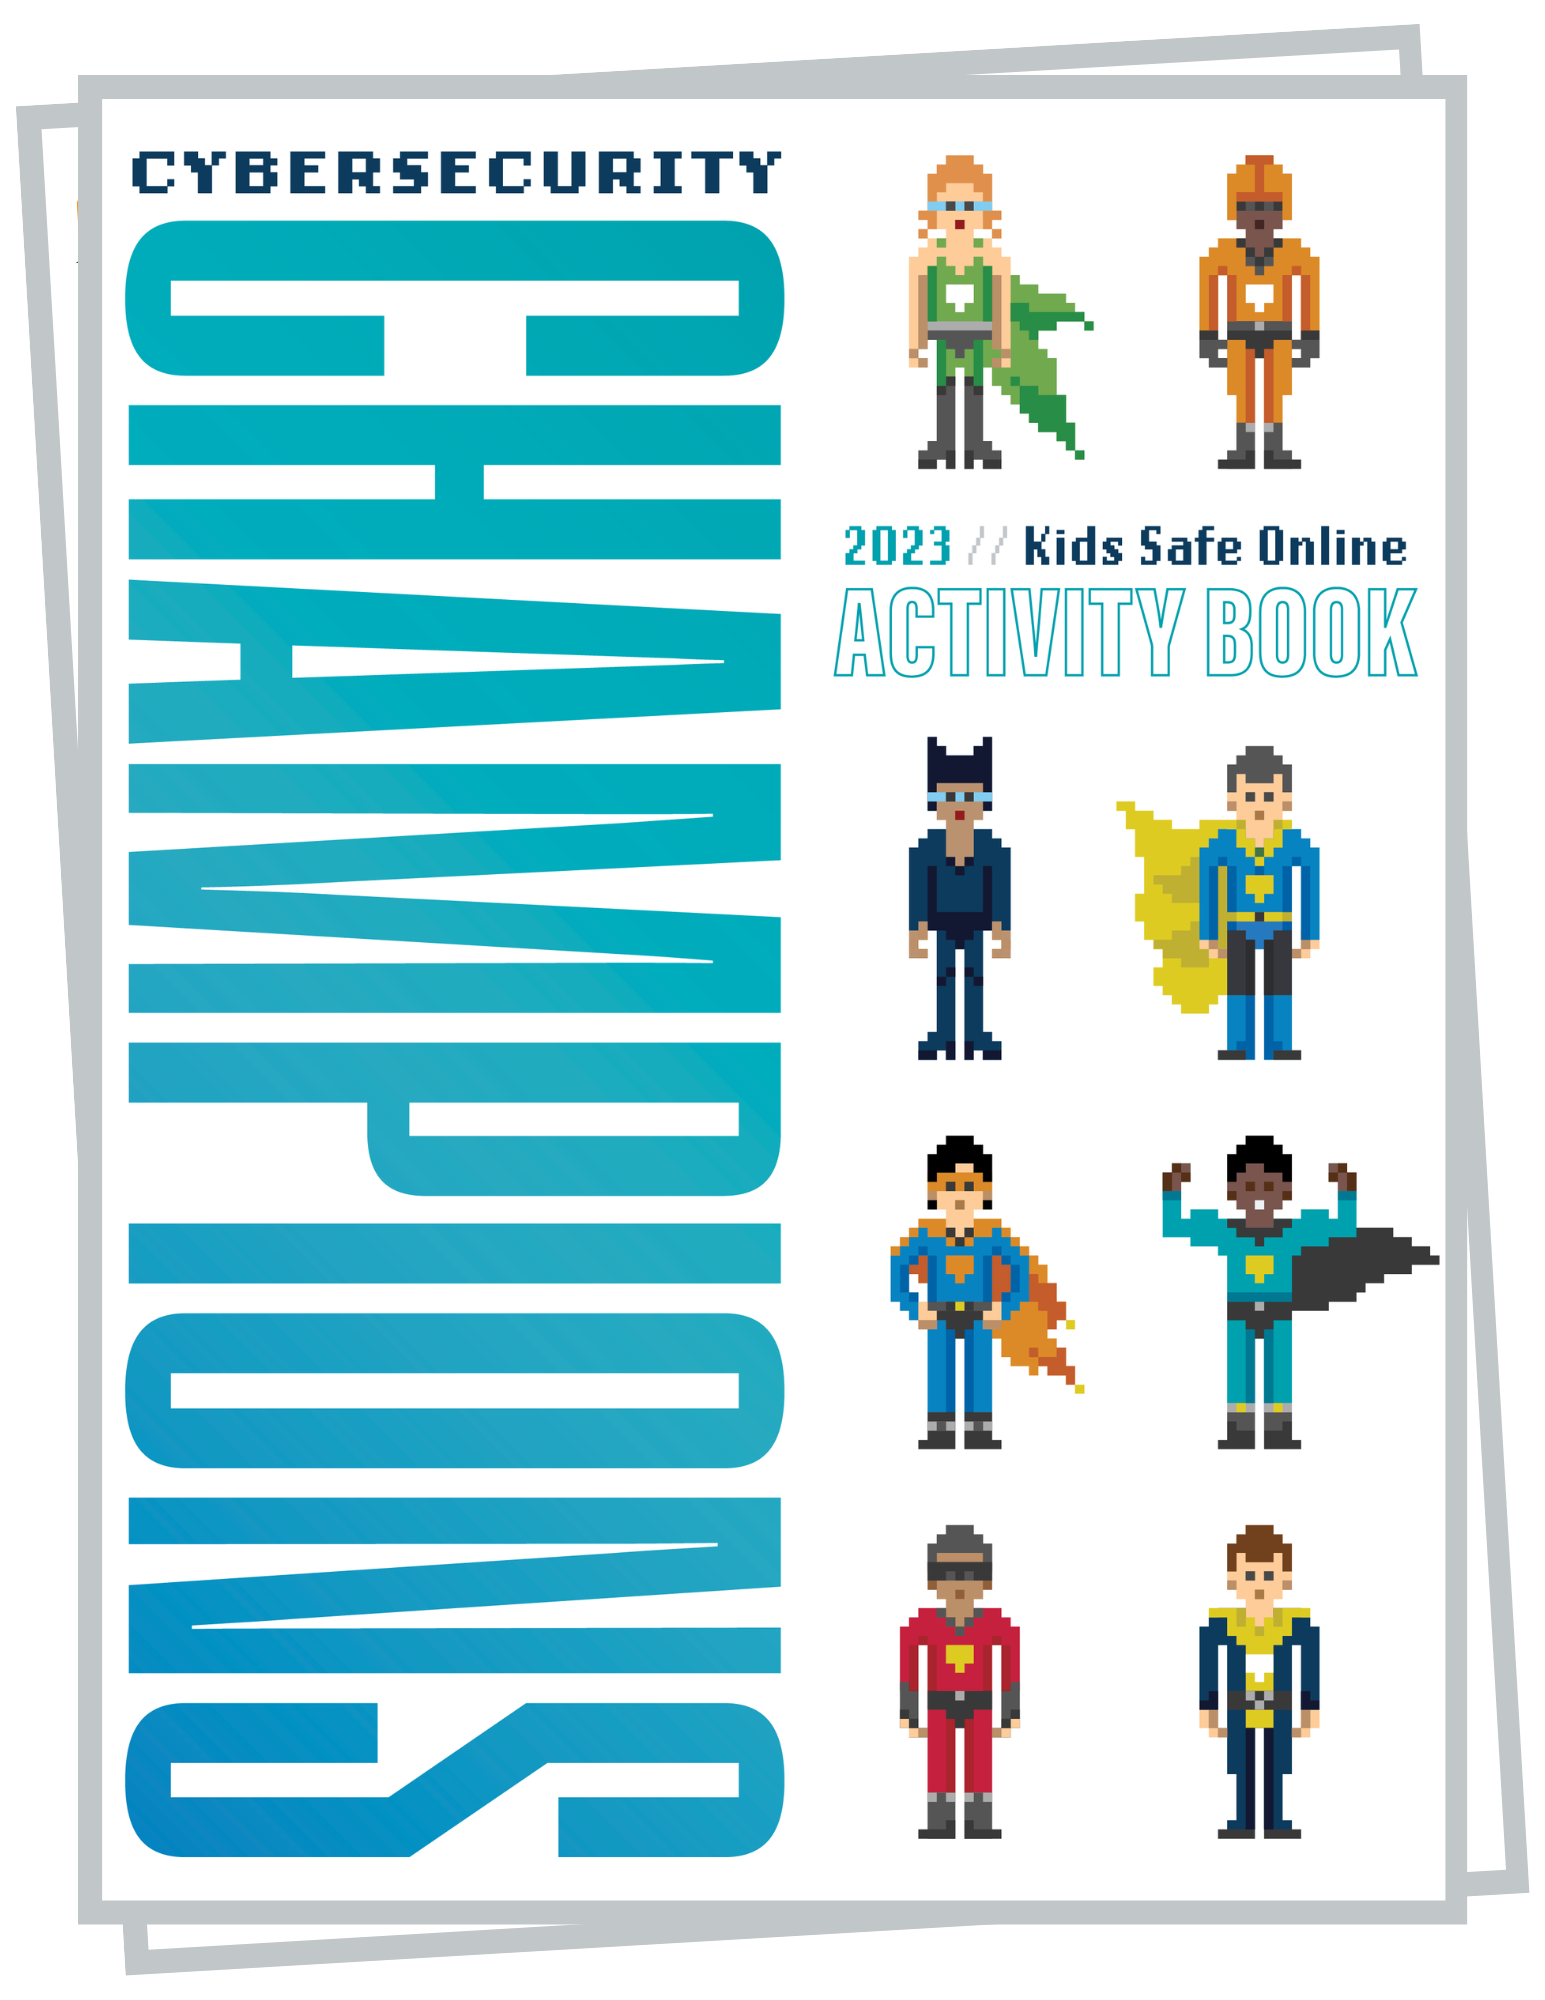 Kids Safe Online Activity Book 2022 cover